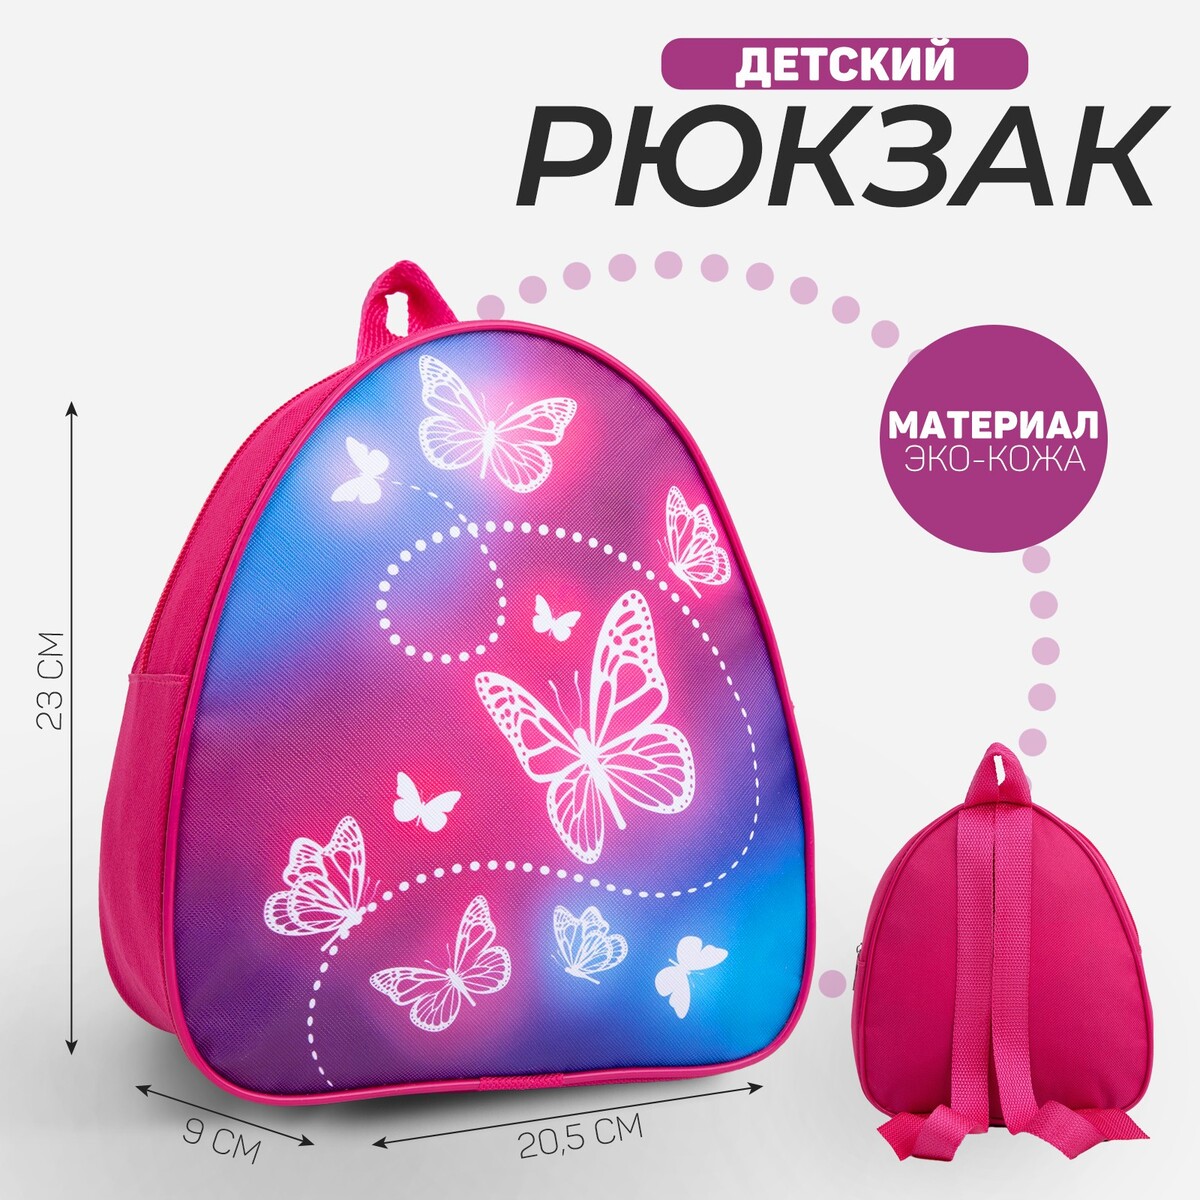 Рюкзак детский для девочки beautuful butterfly, 23х20,5 см